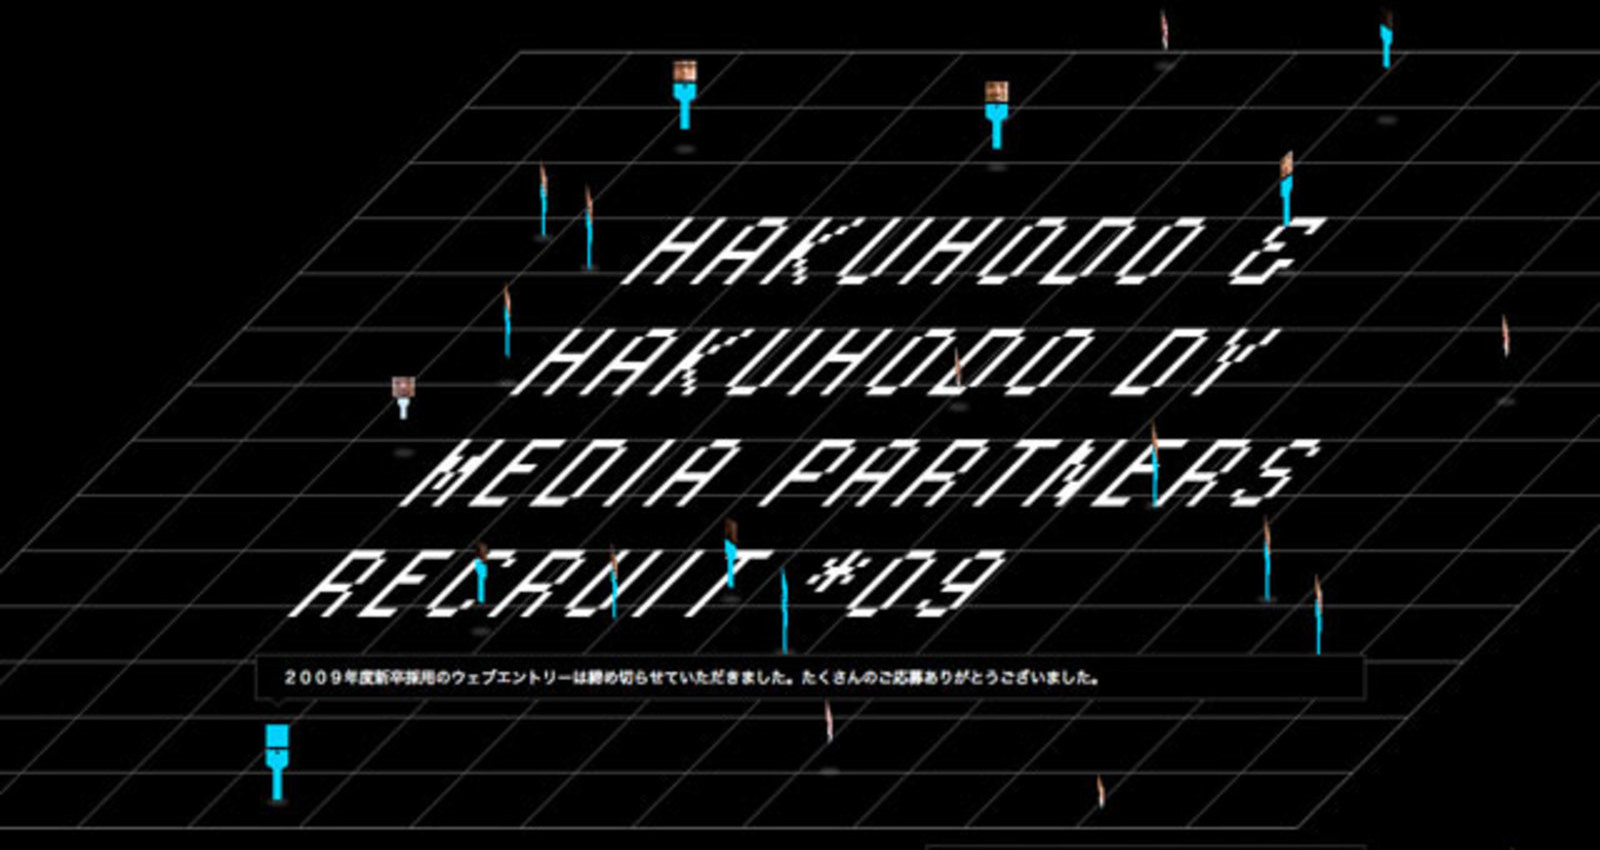 Hakuhodo & Hakuhodo DY media partners Recruit 2009<ugokasu.com>